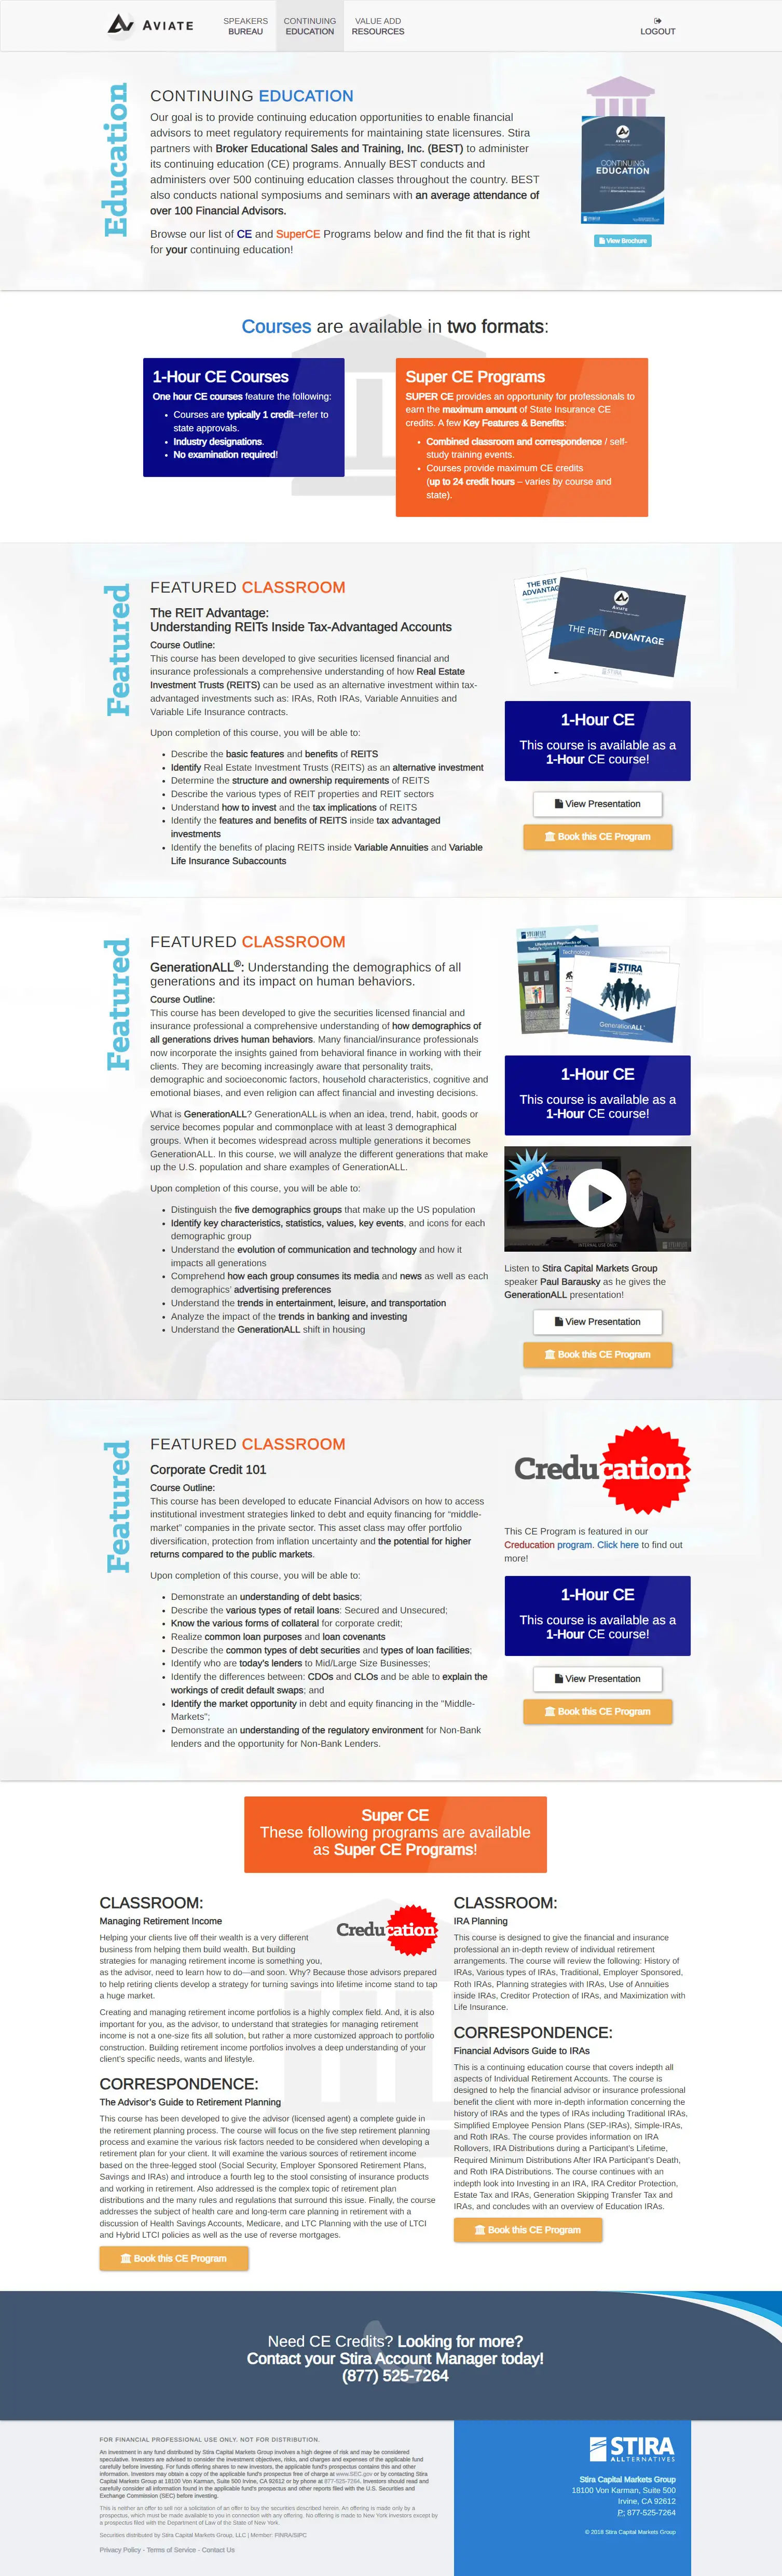 AVIATE -WordPress Website - Continuing Education Resources